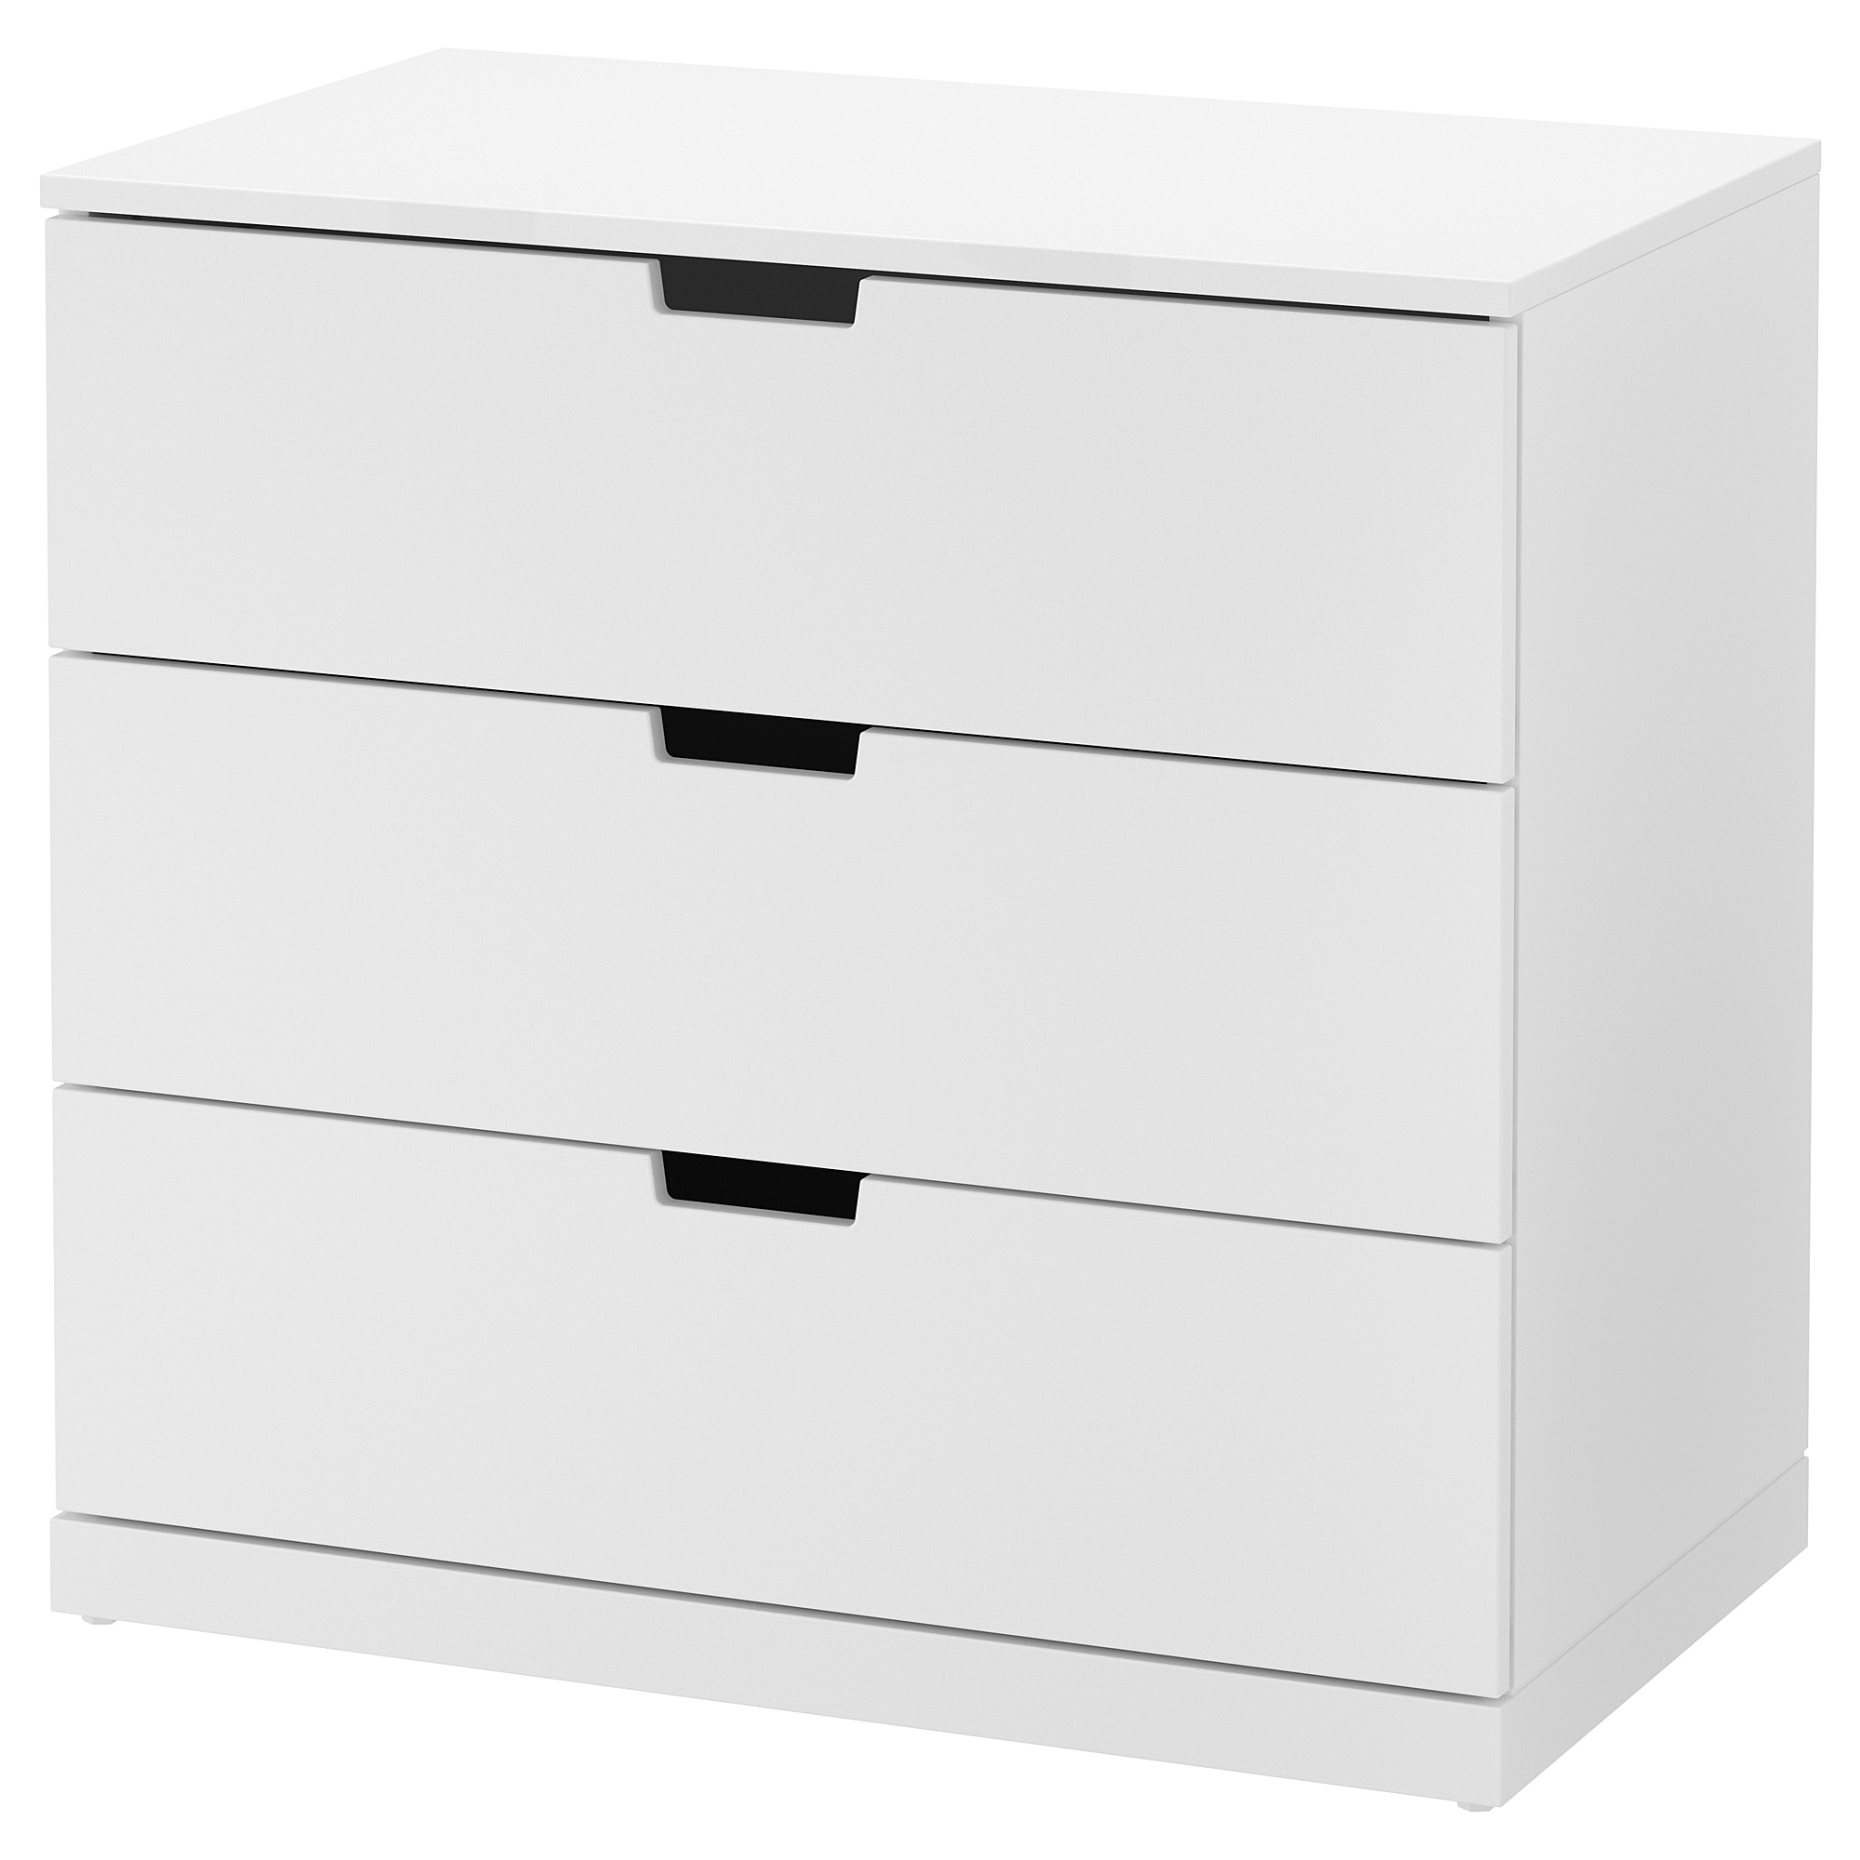 NORDLI, chest of 3 drawers, 80x76 cm, 692.394.95